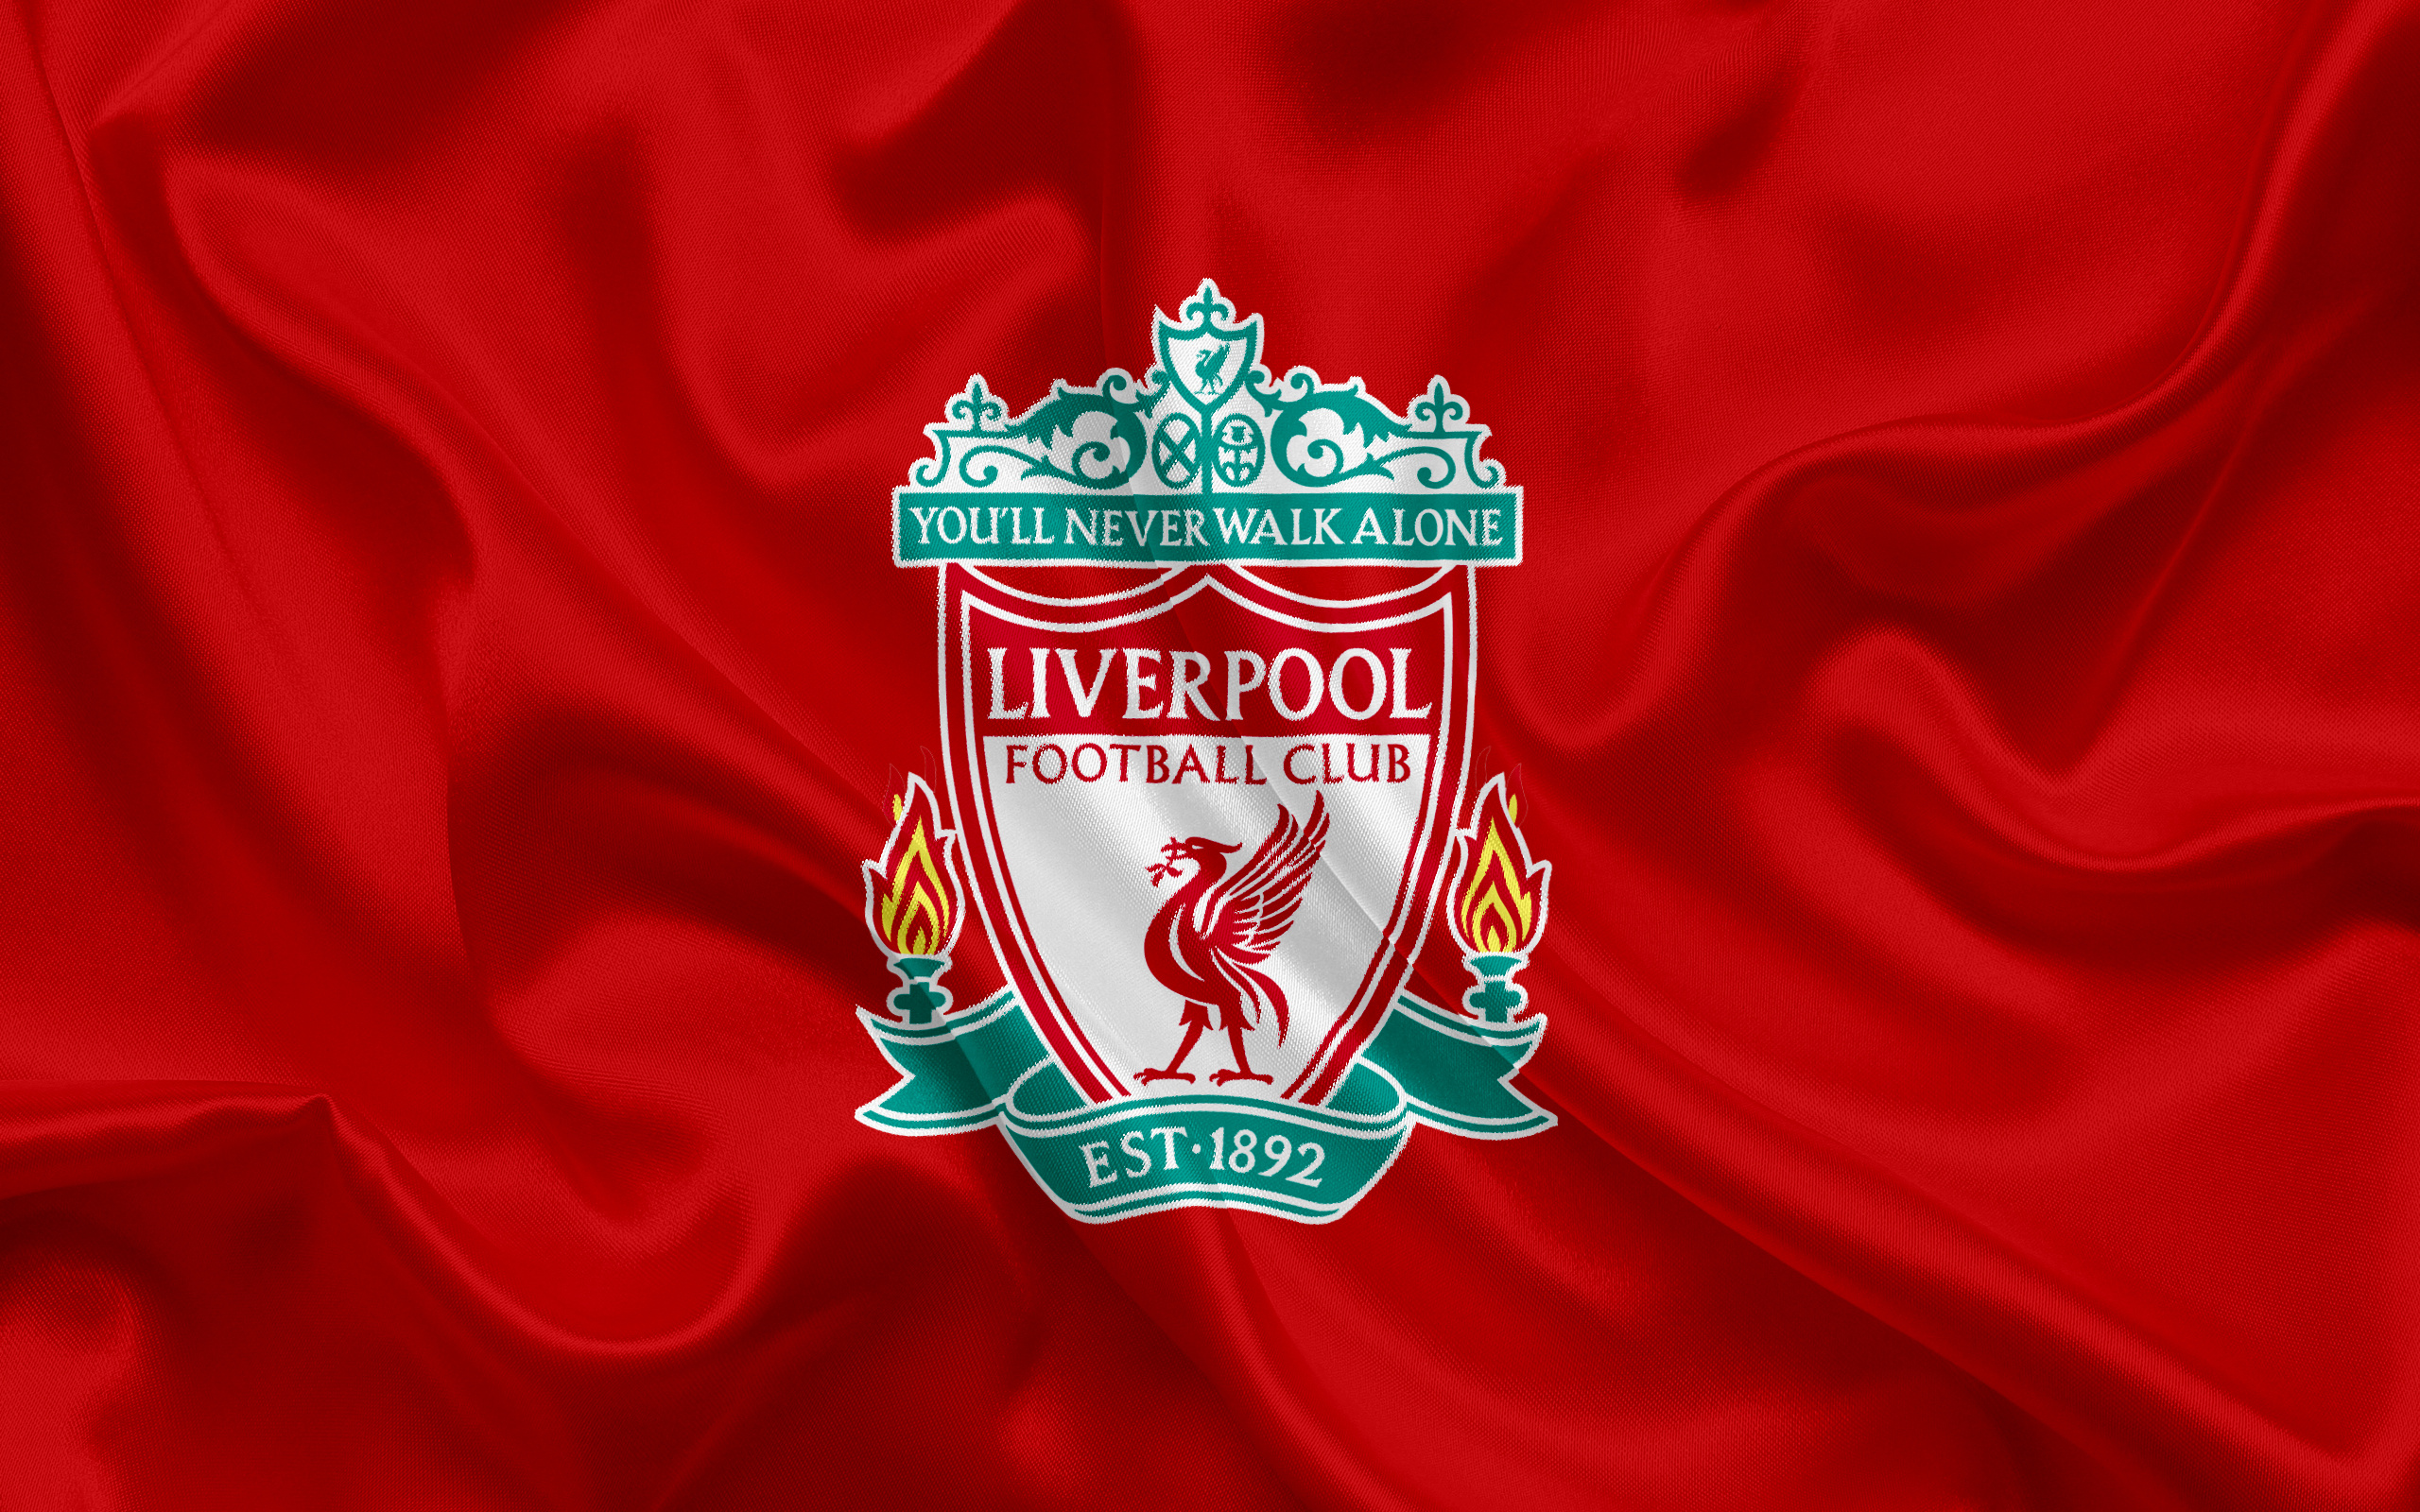 Liverpool Football Club: LFC, won 19 League titles, eight FA Cups, a record nine League Cups. 2560x1600 HD Wallpaper.